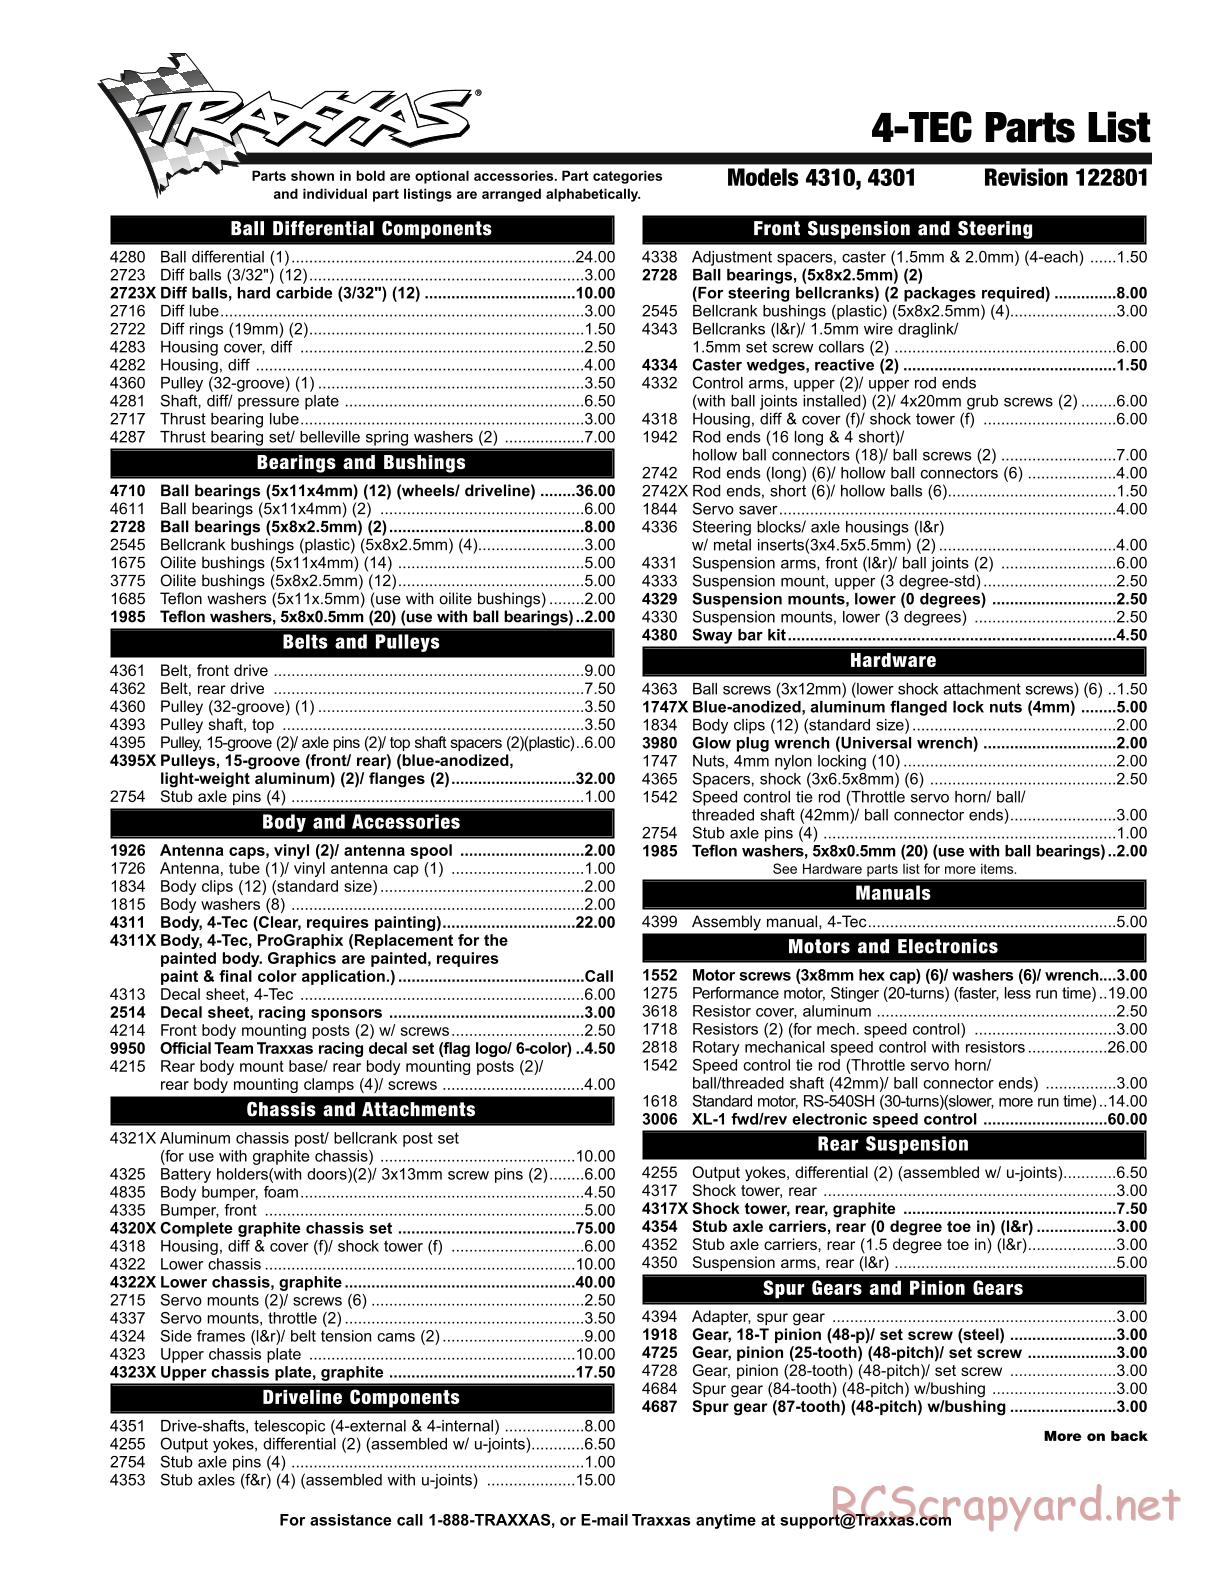 Traxxas - 4-Tec (1998) - Parts List - Page 1